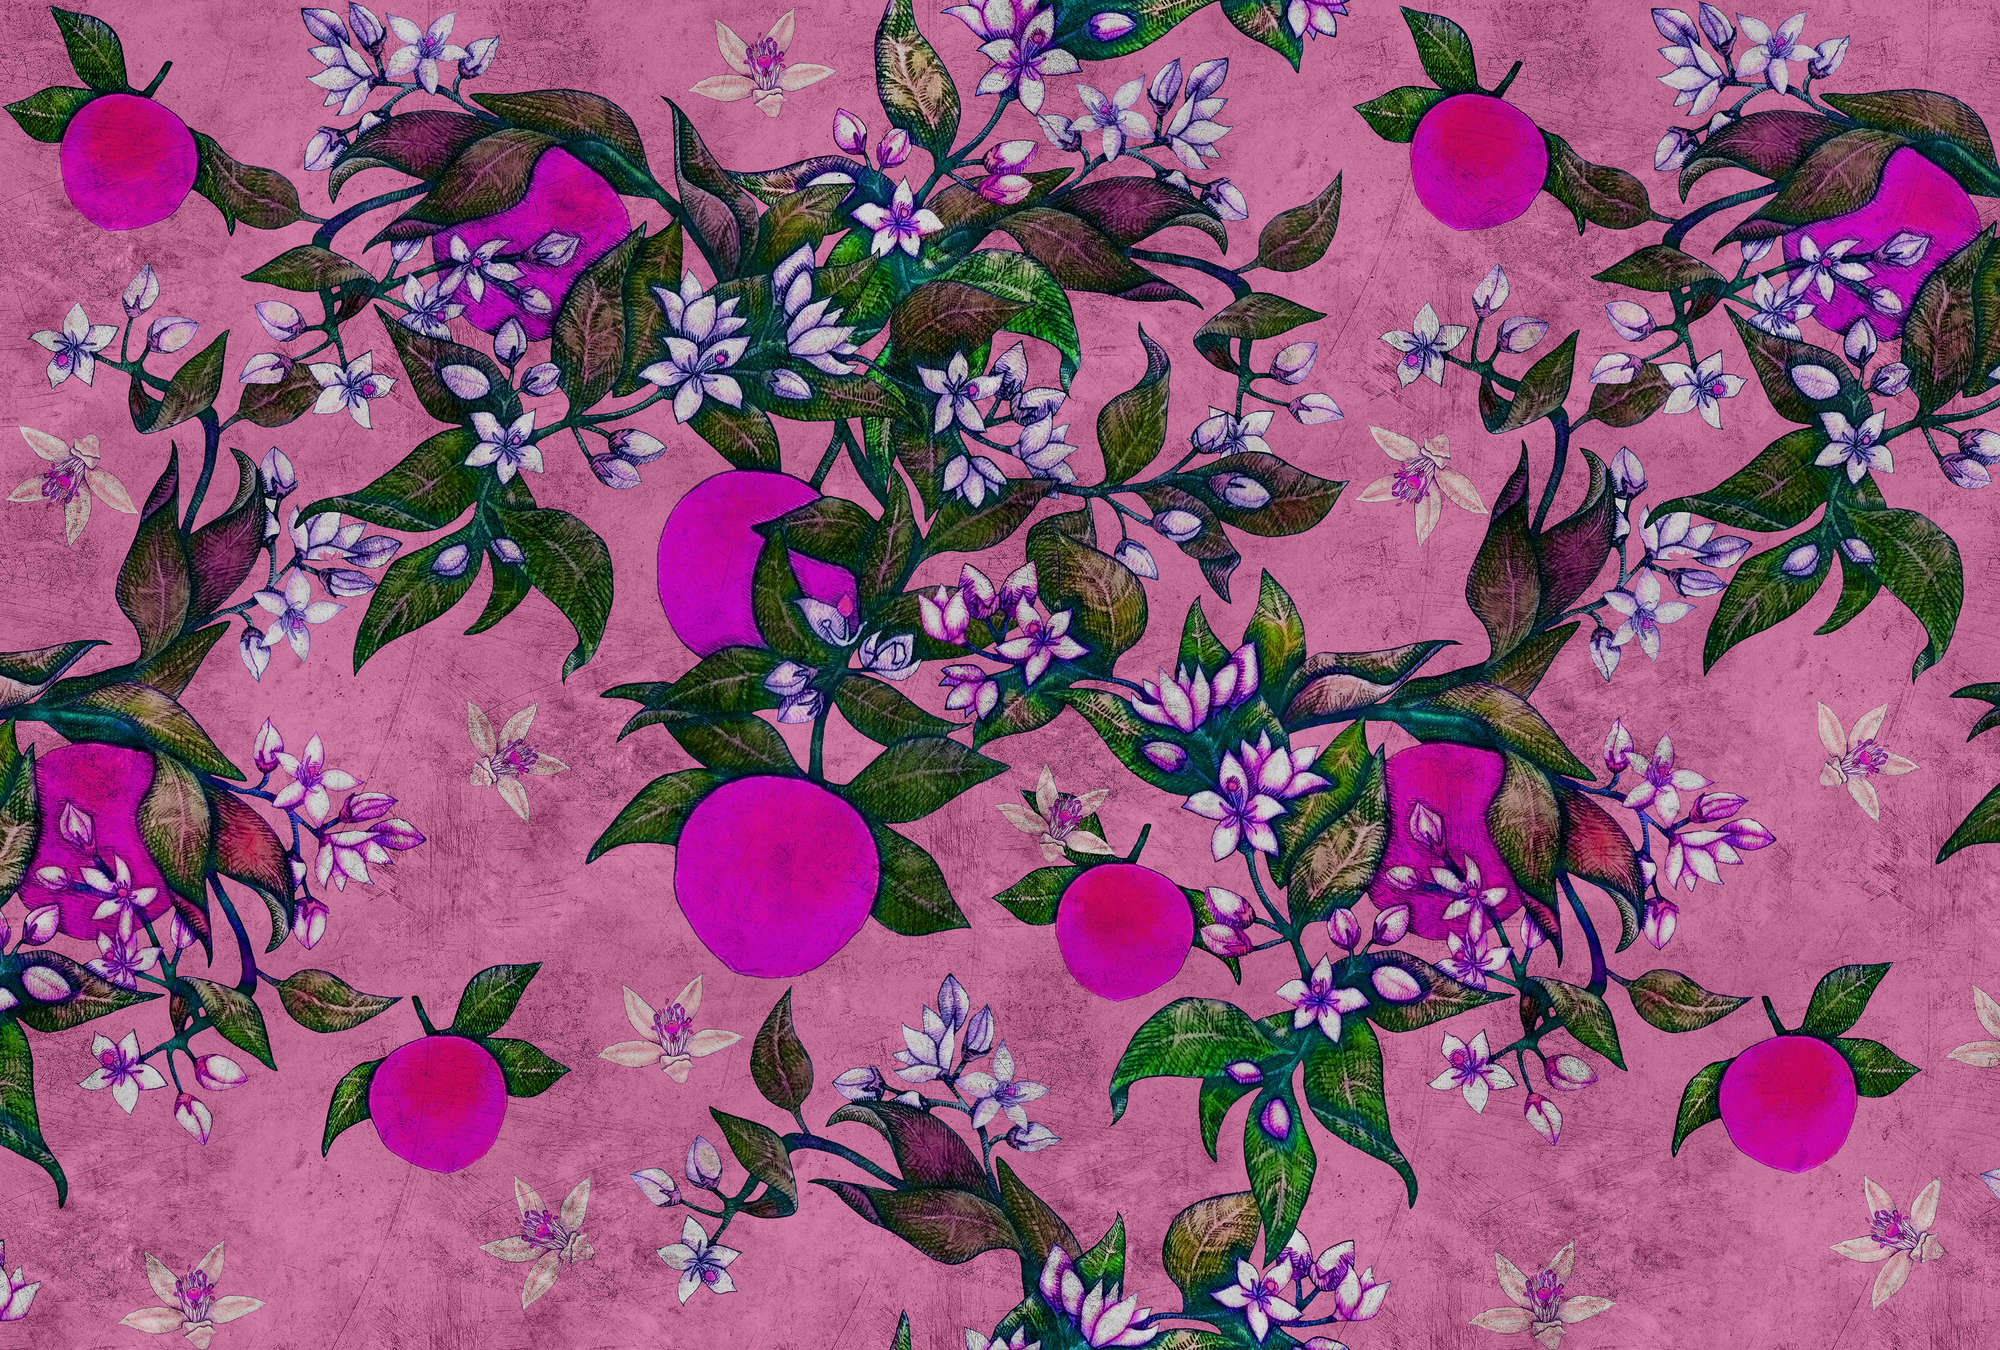             Grapefruit Tree 2 - Fototapete mit Grapefruit & Blütendesign in kratzer Struktur – Rosa, Violett | Struktur Vlies
        